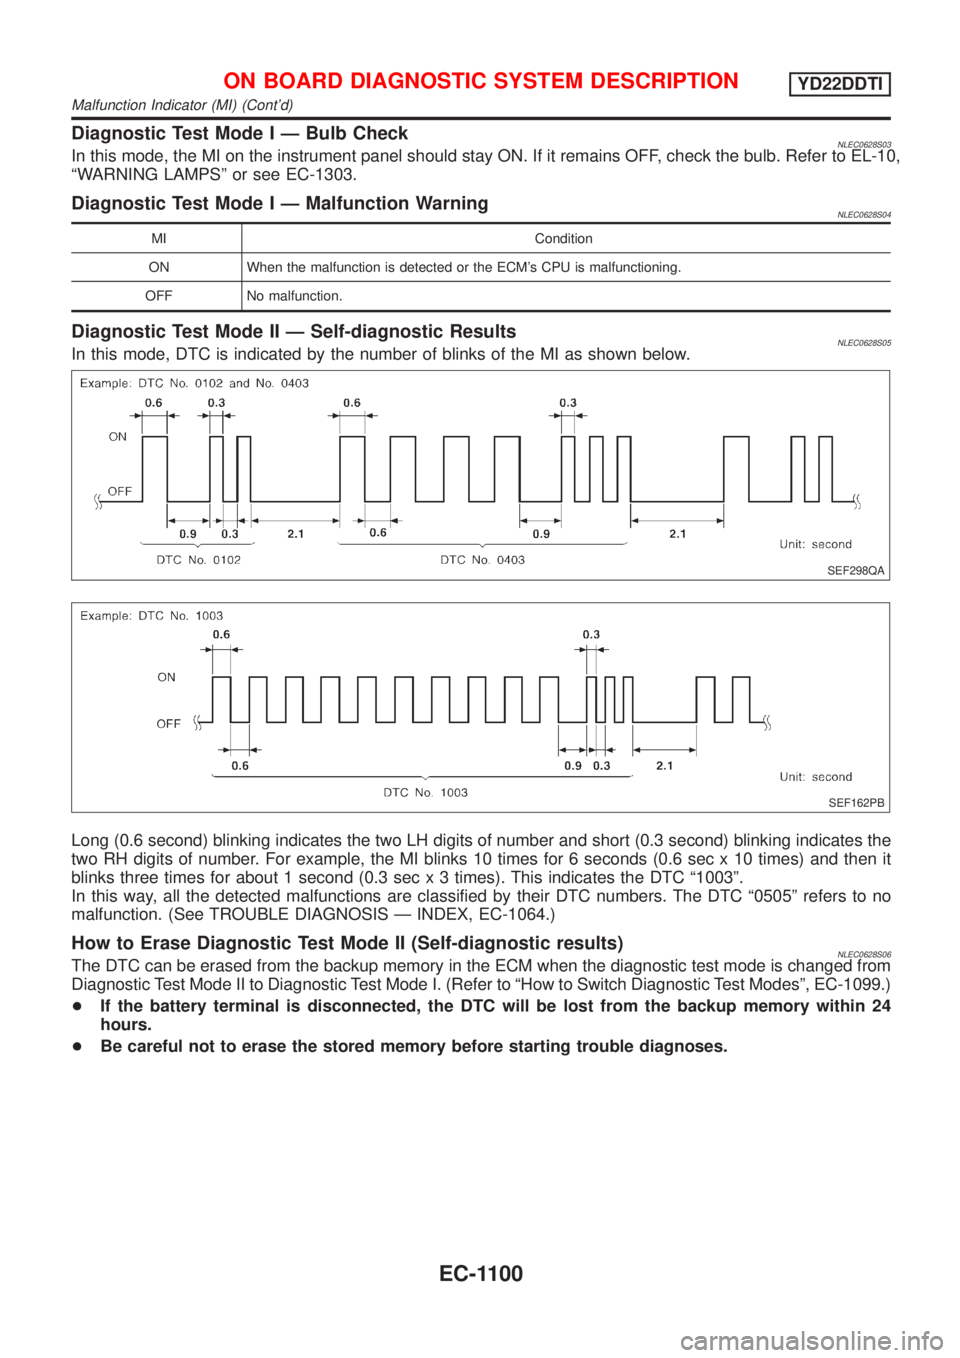 NISSAN ALMERA TINO 2001  Service Repair Manual DiagnosticTes tMod eIÐ BulbCheck
MI   Condition
SEF298QA
SEF162PB
Malfunction Indicator (MI) (Contd) 